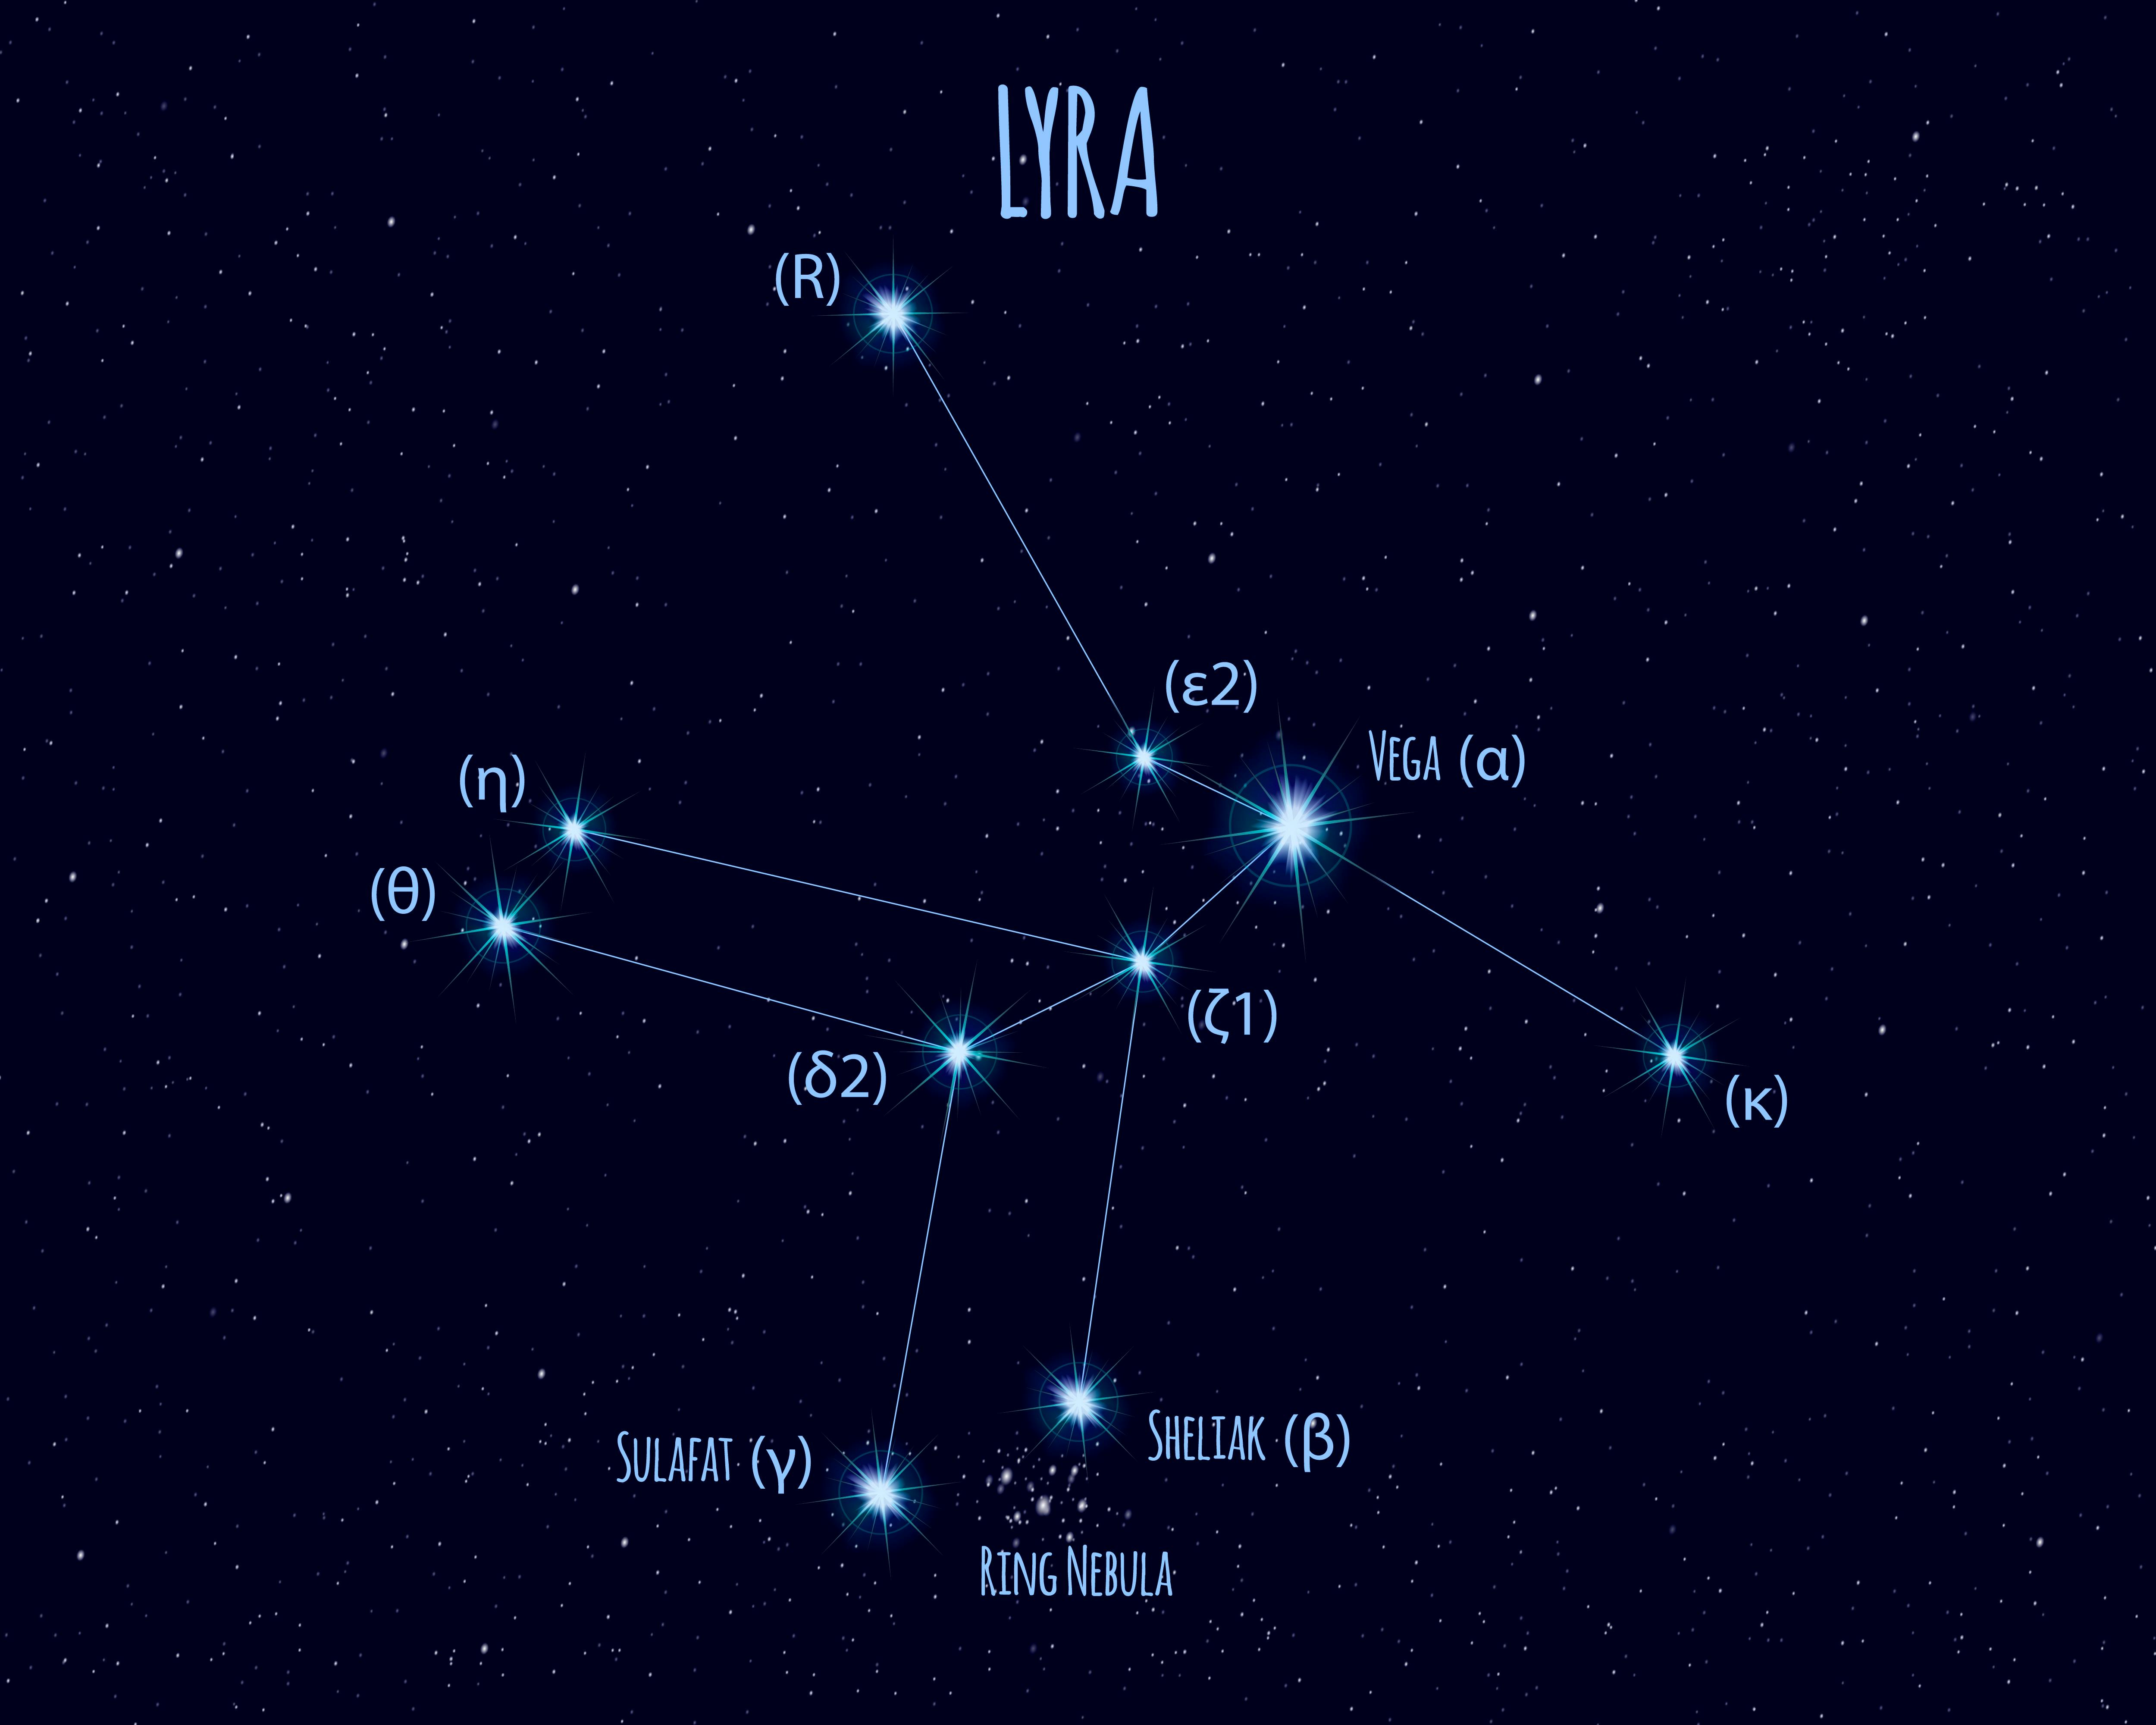 The stars of Lyra